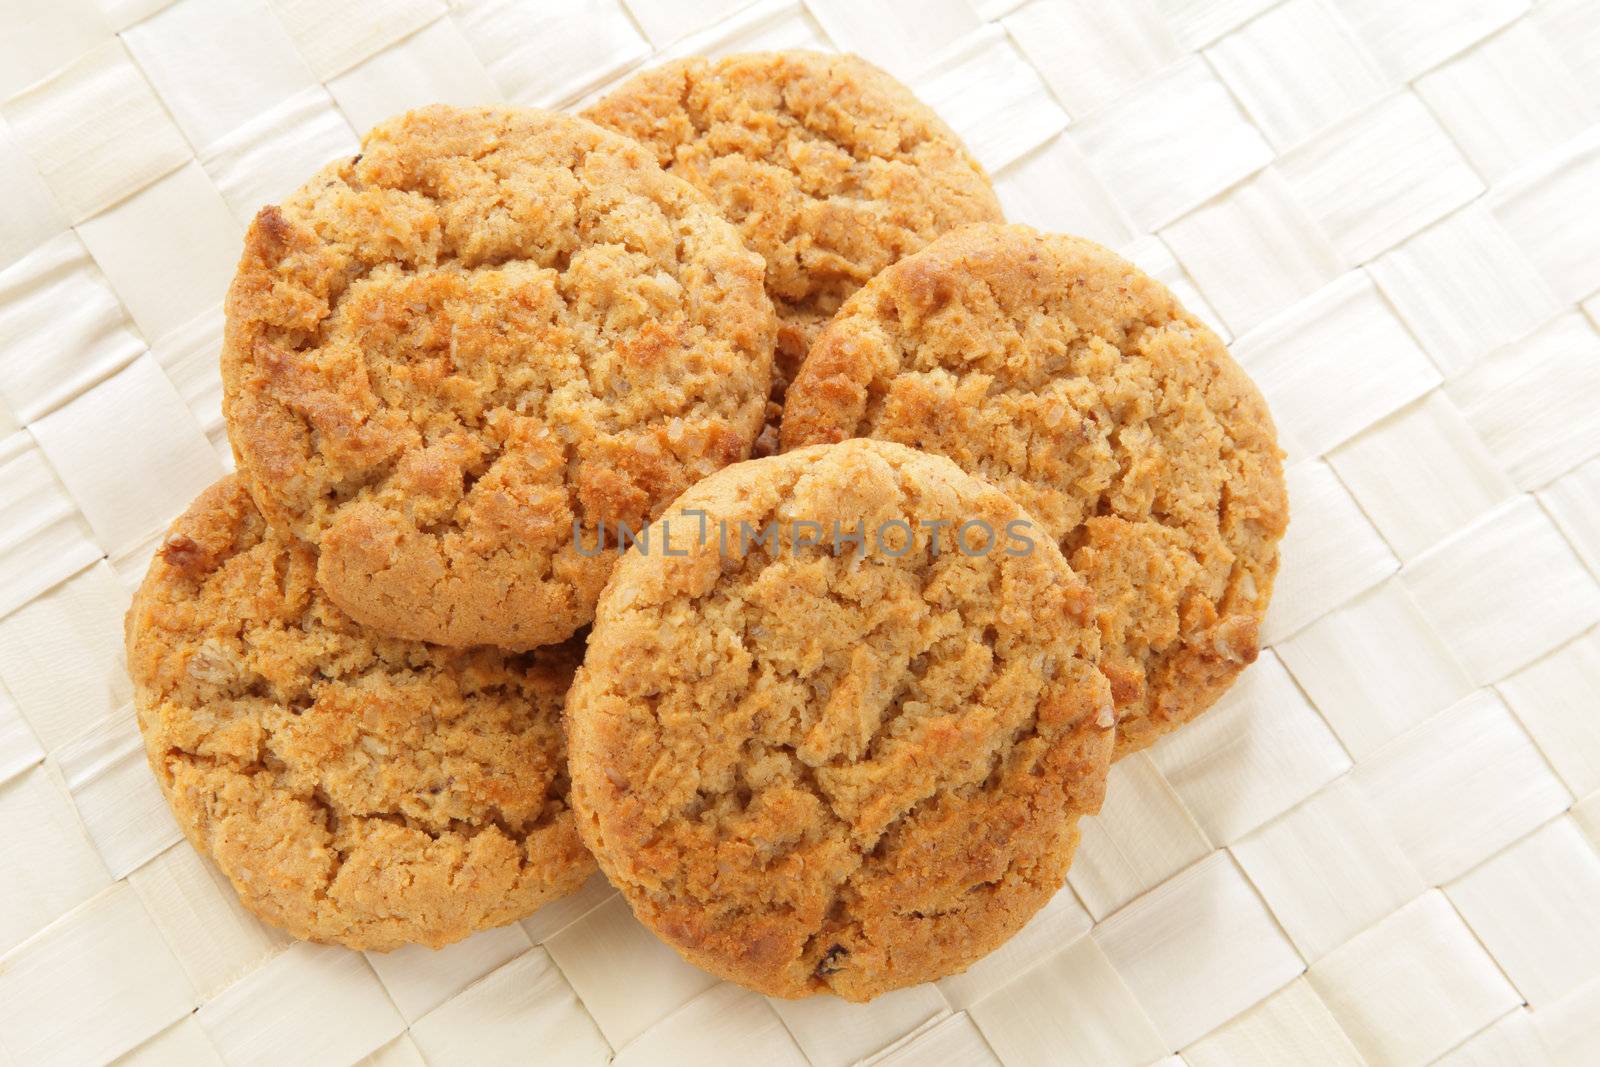 Oatmeal cookies by carterphoto